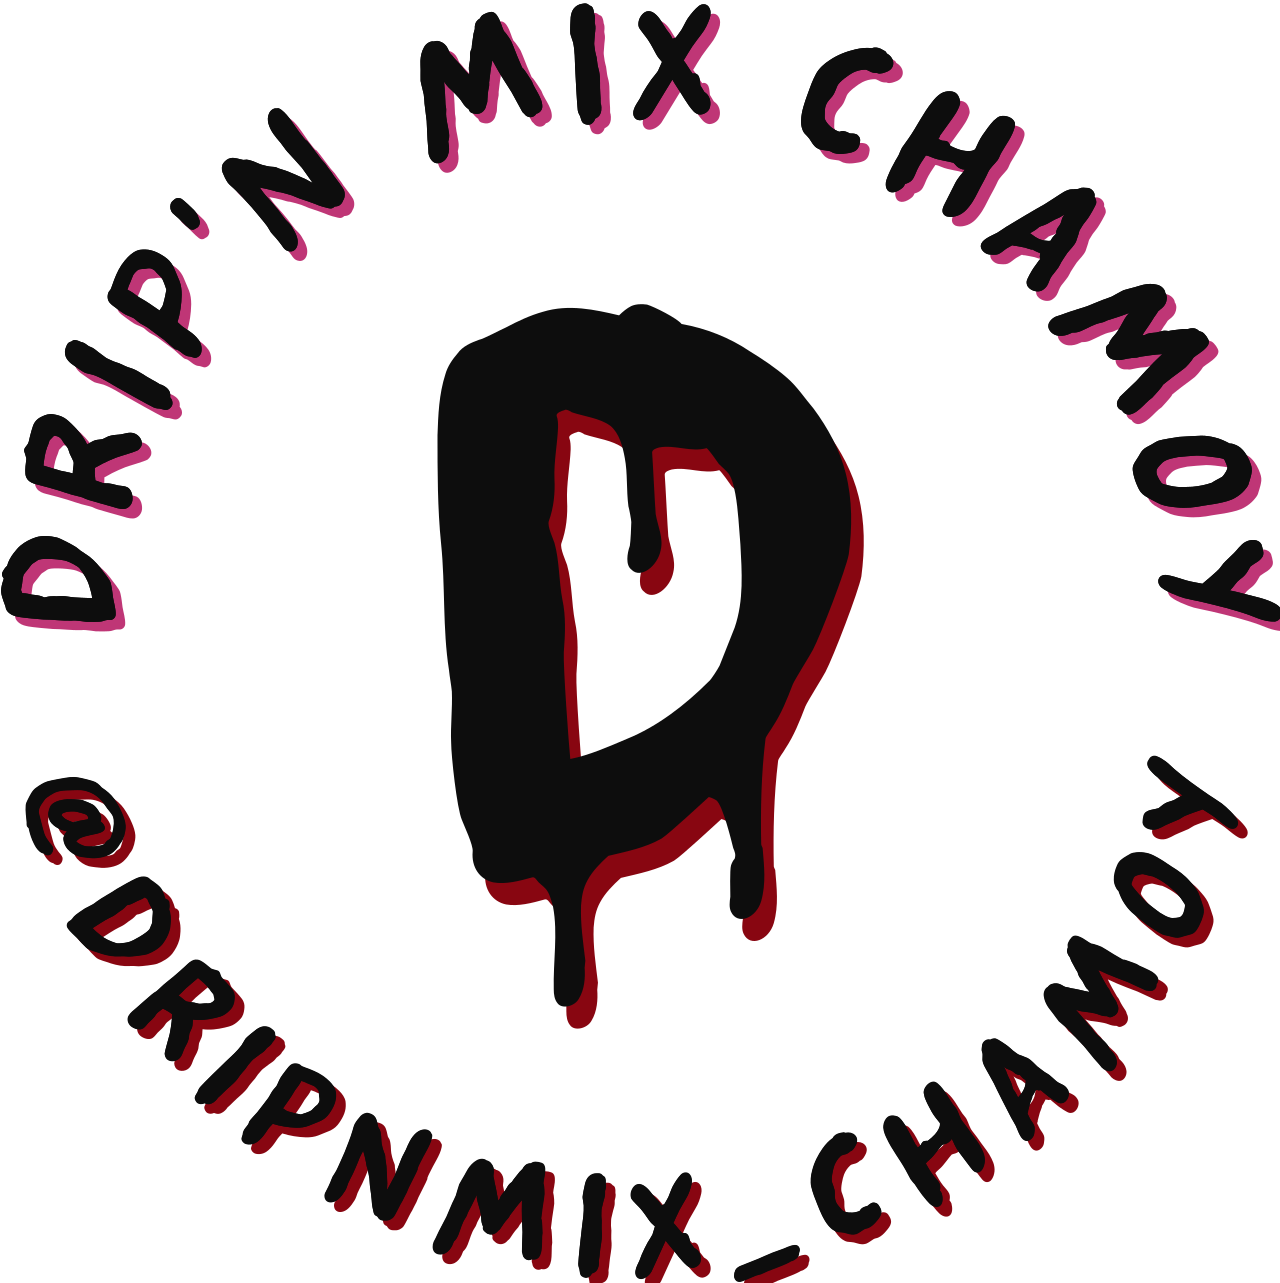 Drip'n mix Chamoy's web page